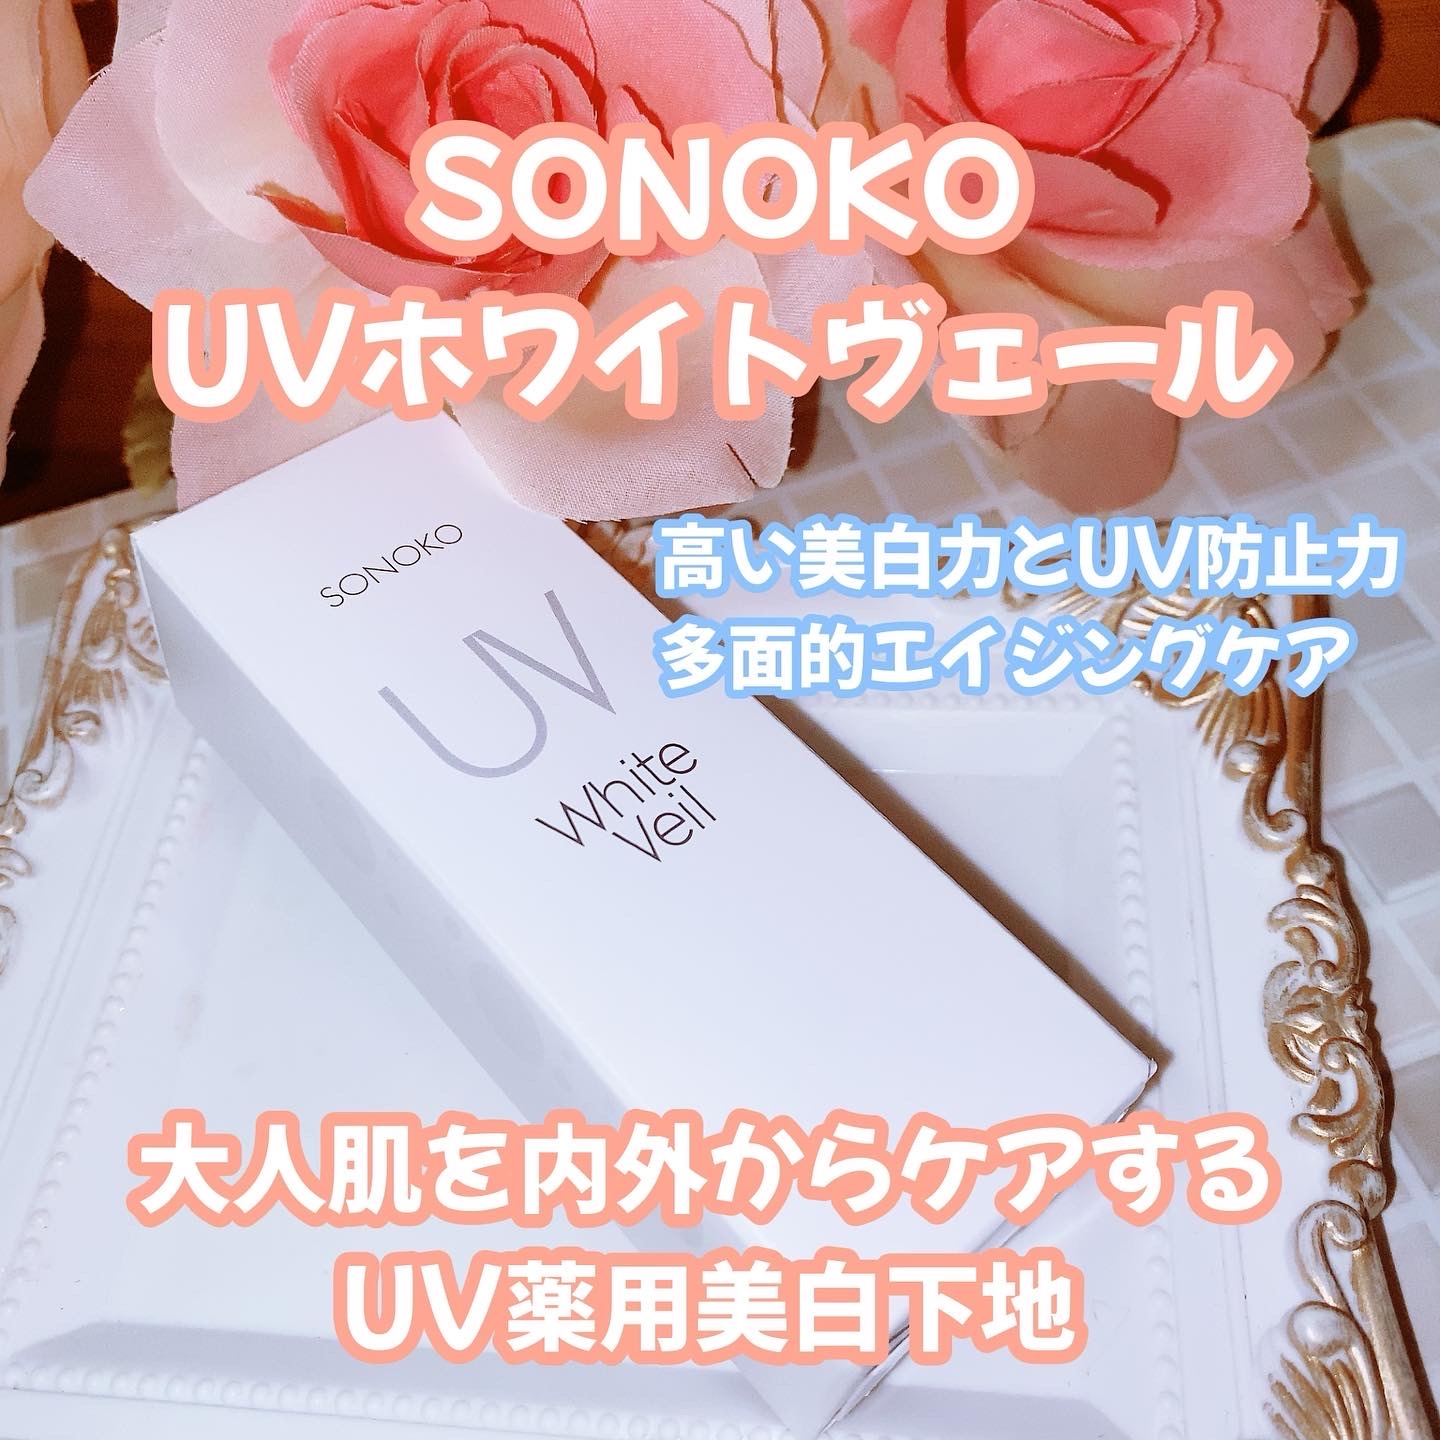 SONOKO(ソノコ) UVホワイトヴェールの良い点・メリットに関する珈琲豆♡さんの口コミ画像1